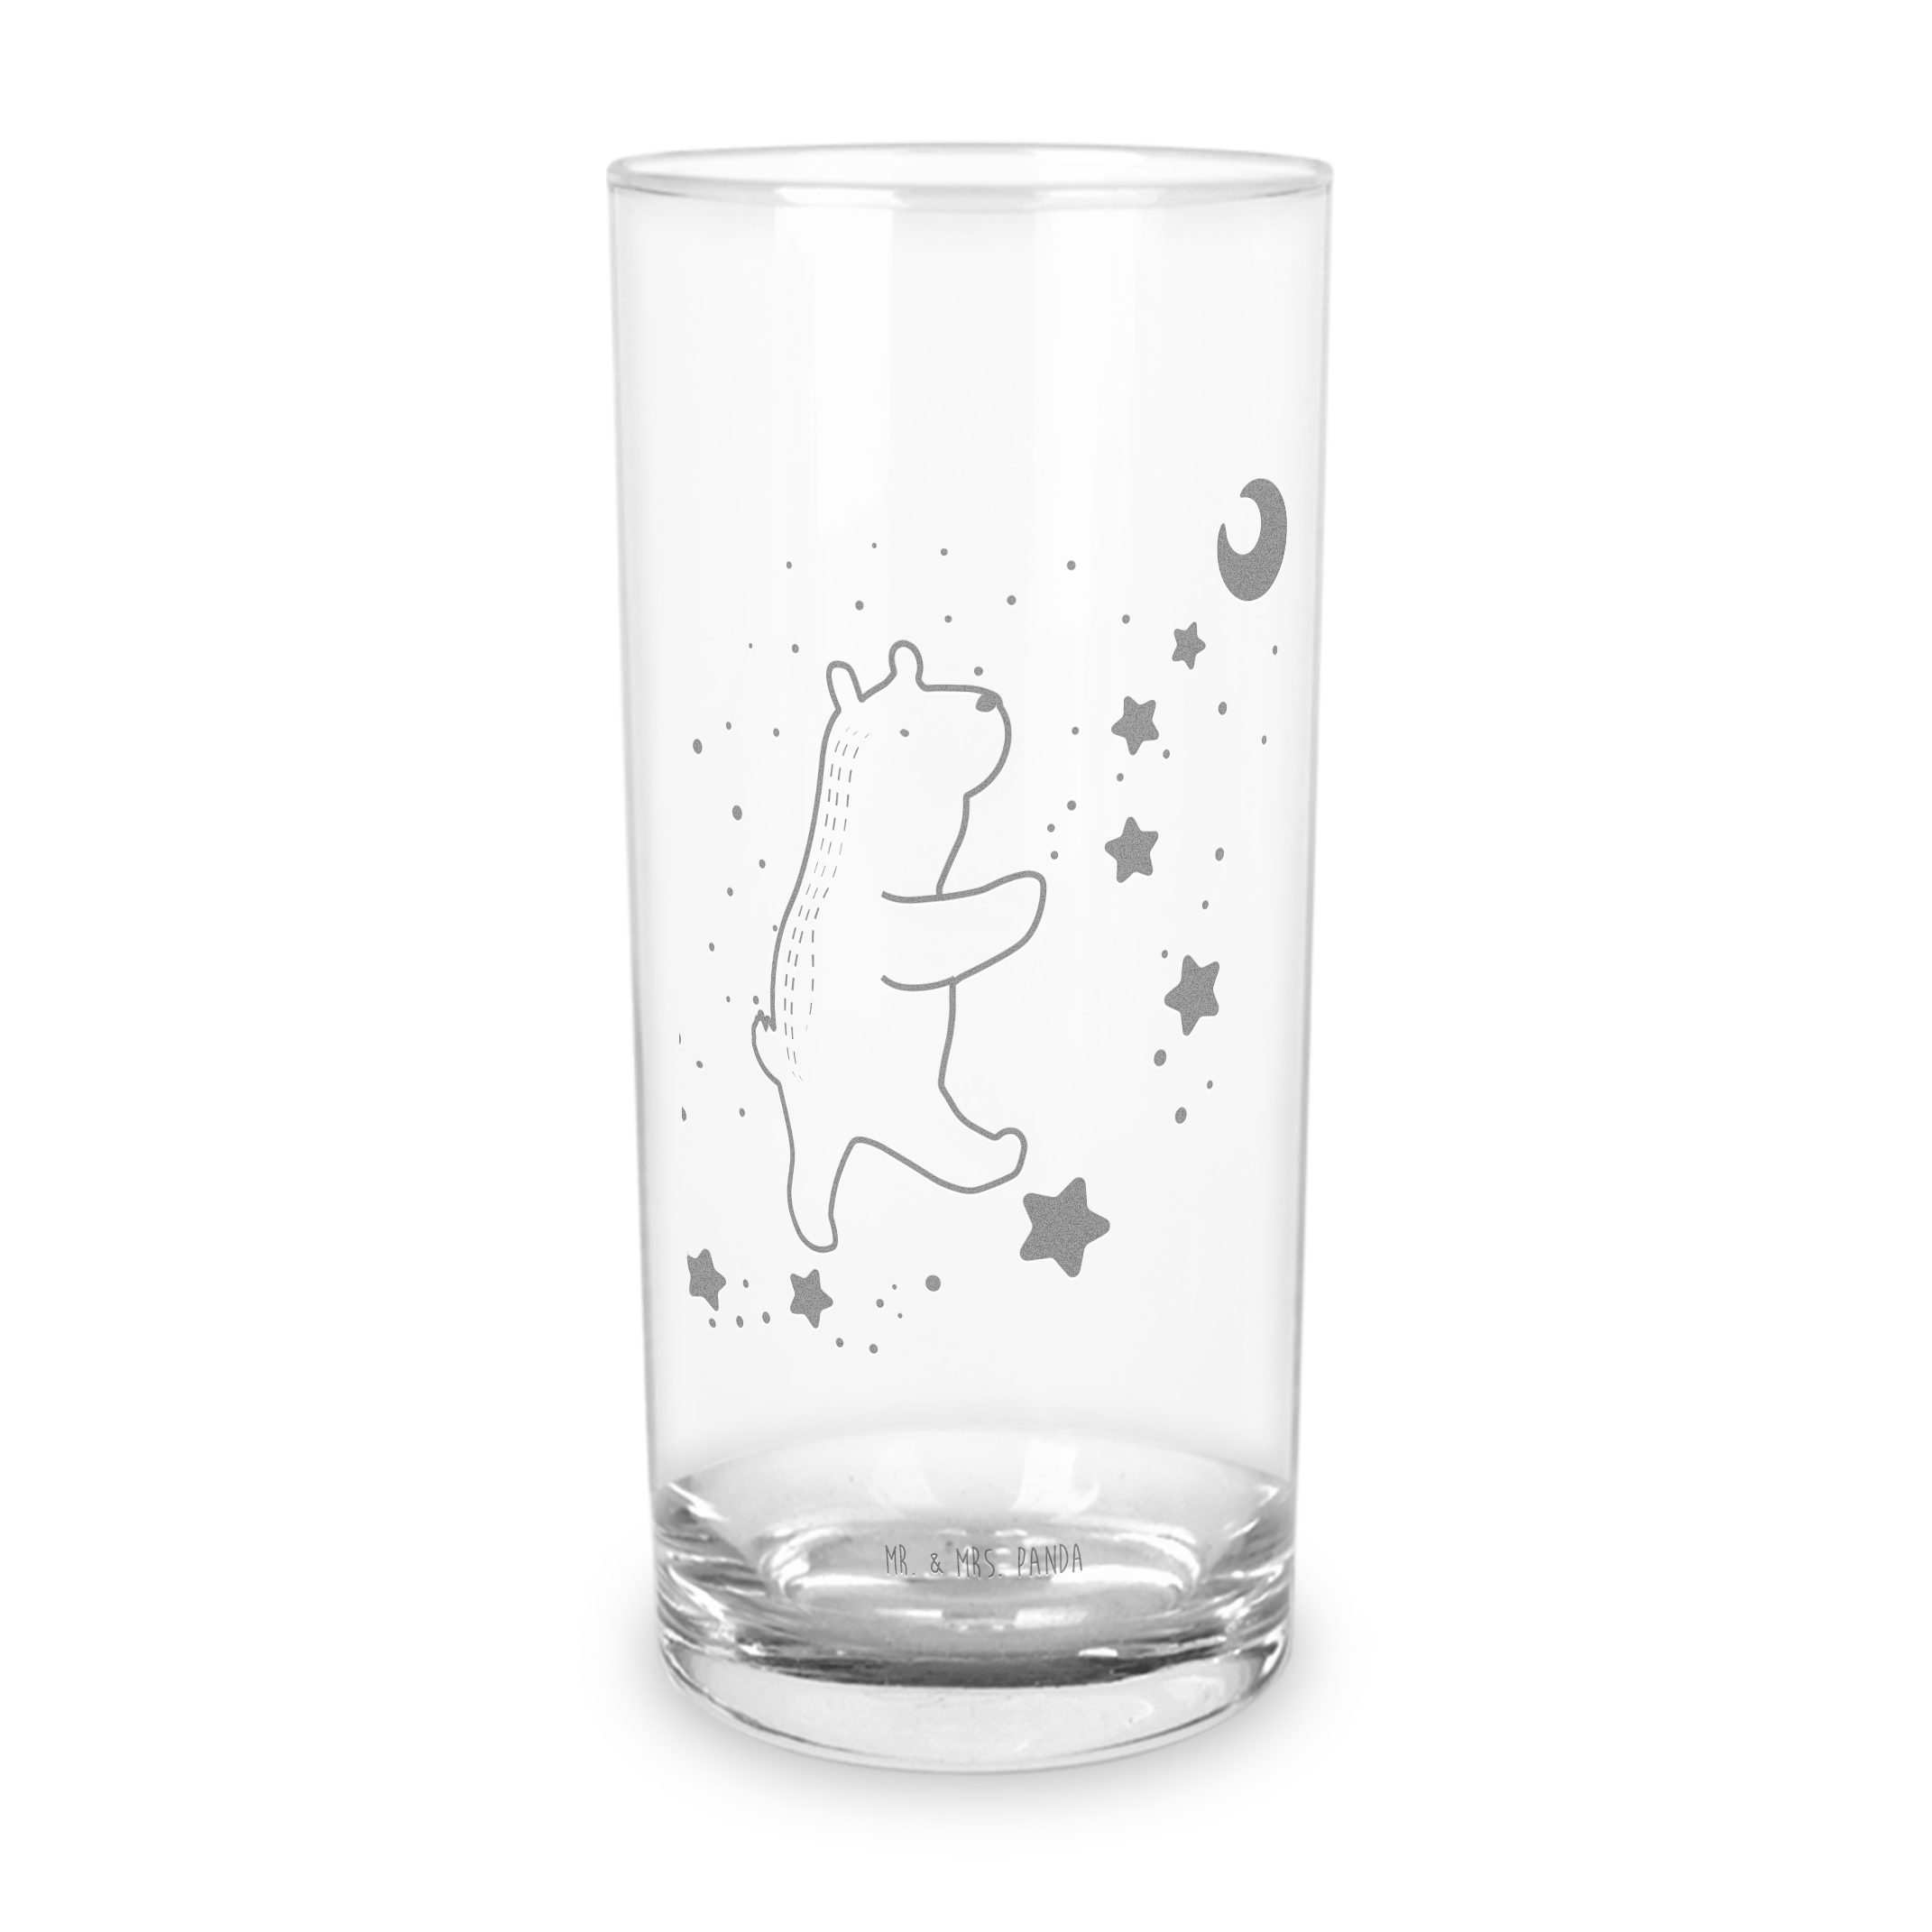 Mr. & Mrs. Panda Glas 400 ml Bär Träume - Transparent - Geschenk, Trinkglas, Glas, Teddybär, Premium Glas, Inspirierende Gravur